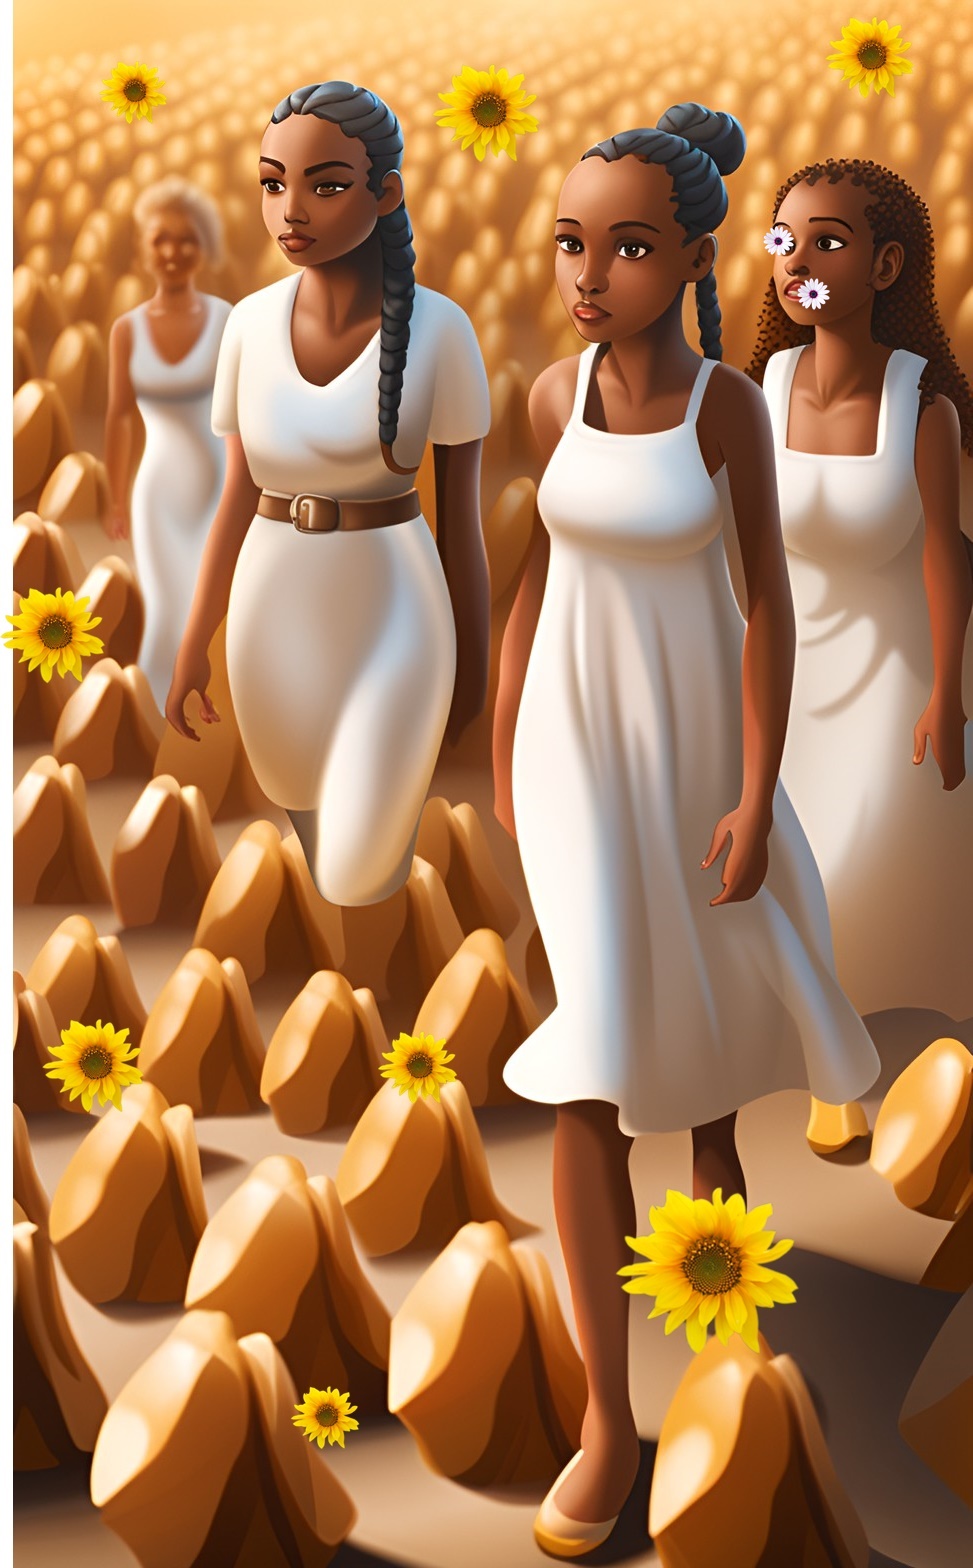 Jamaican little girls in flower field wearing dresses Jamaic85